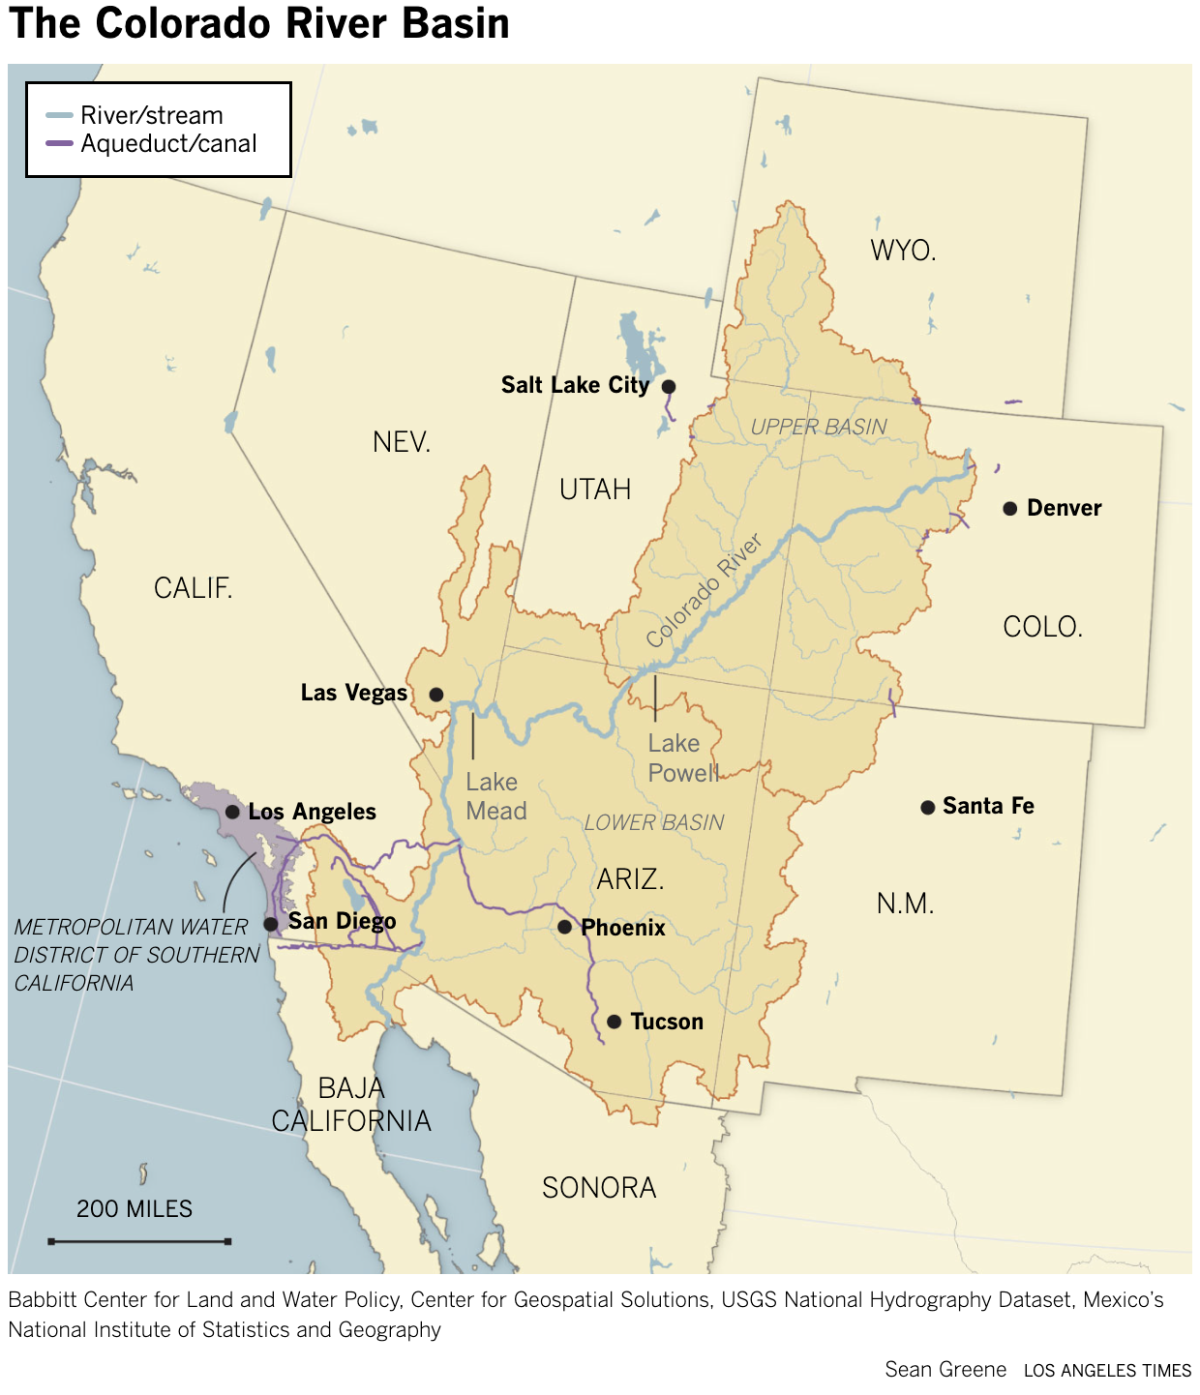 The Colorado River basin